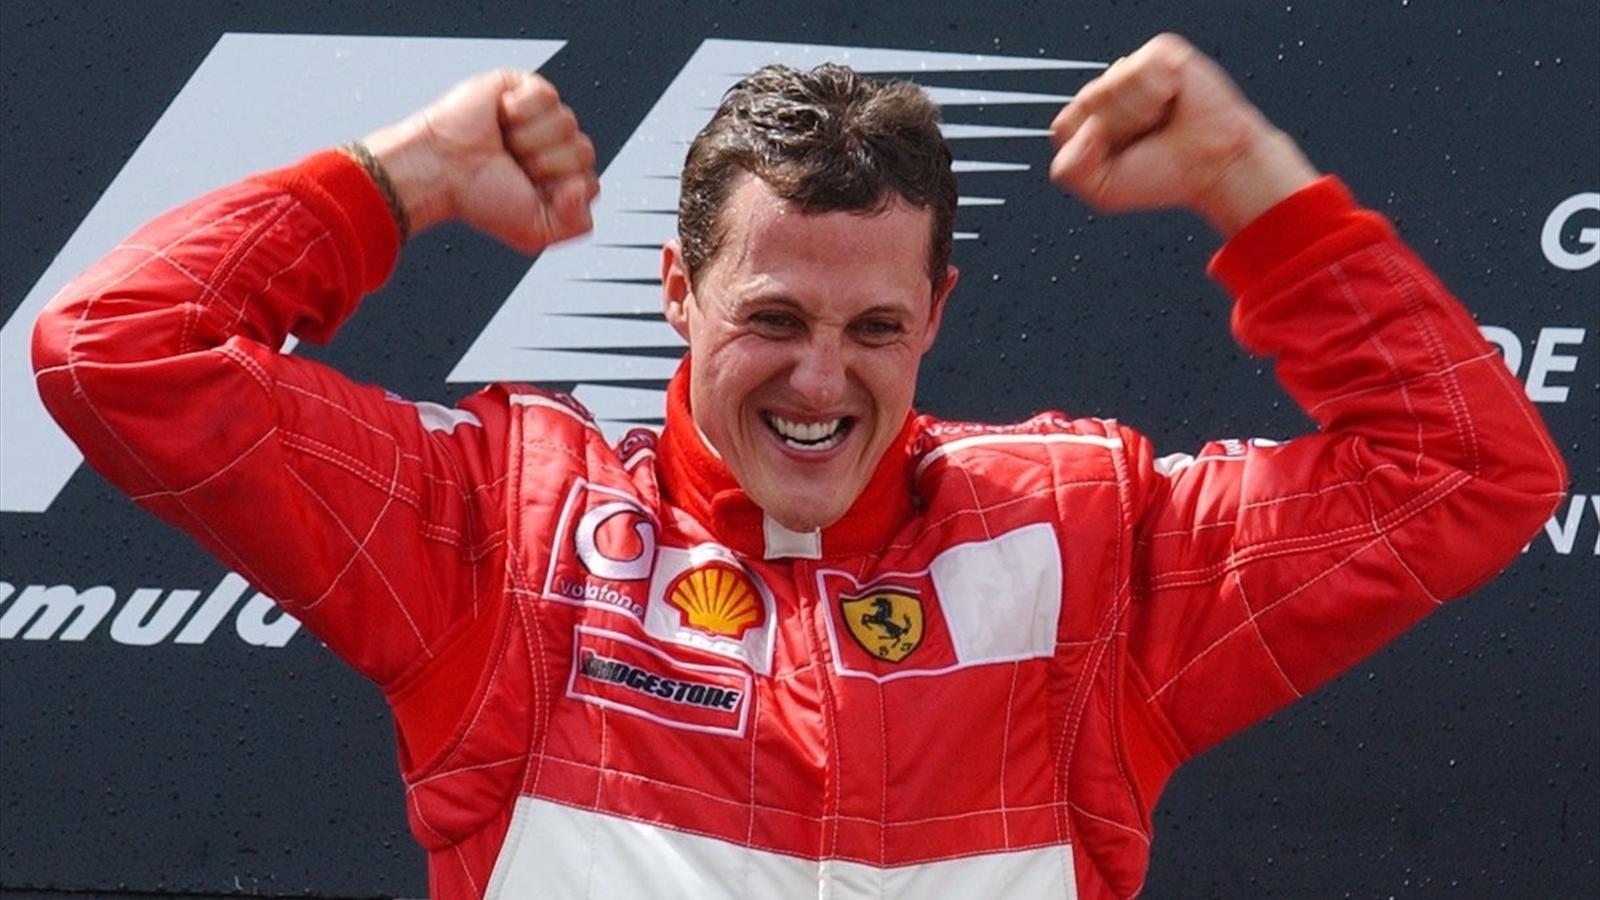 Michael Schumacher celebrates another win for Ferrari in 2002